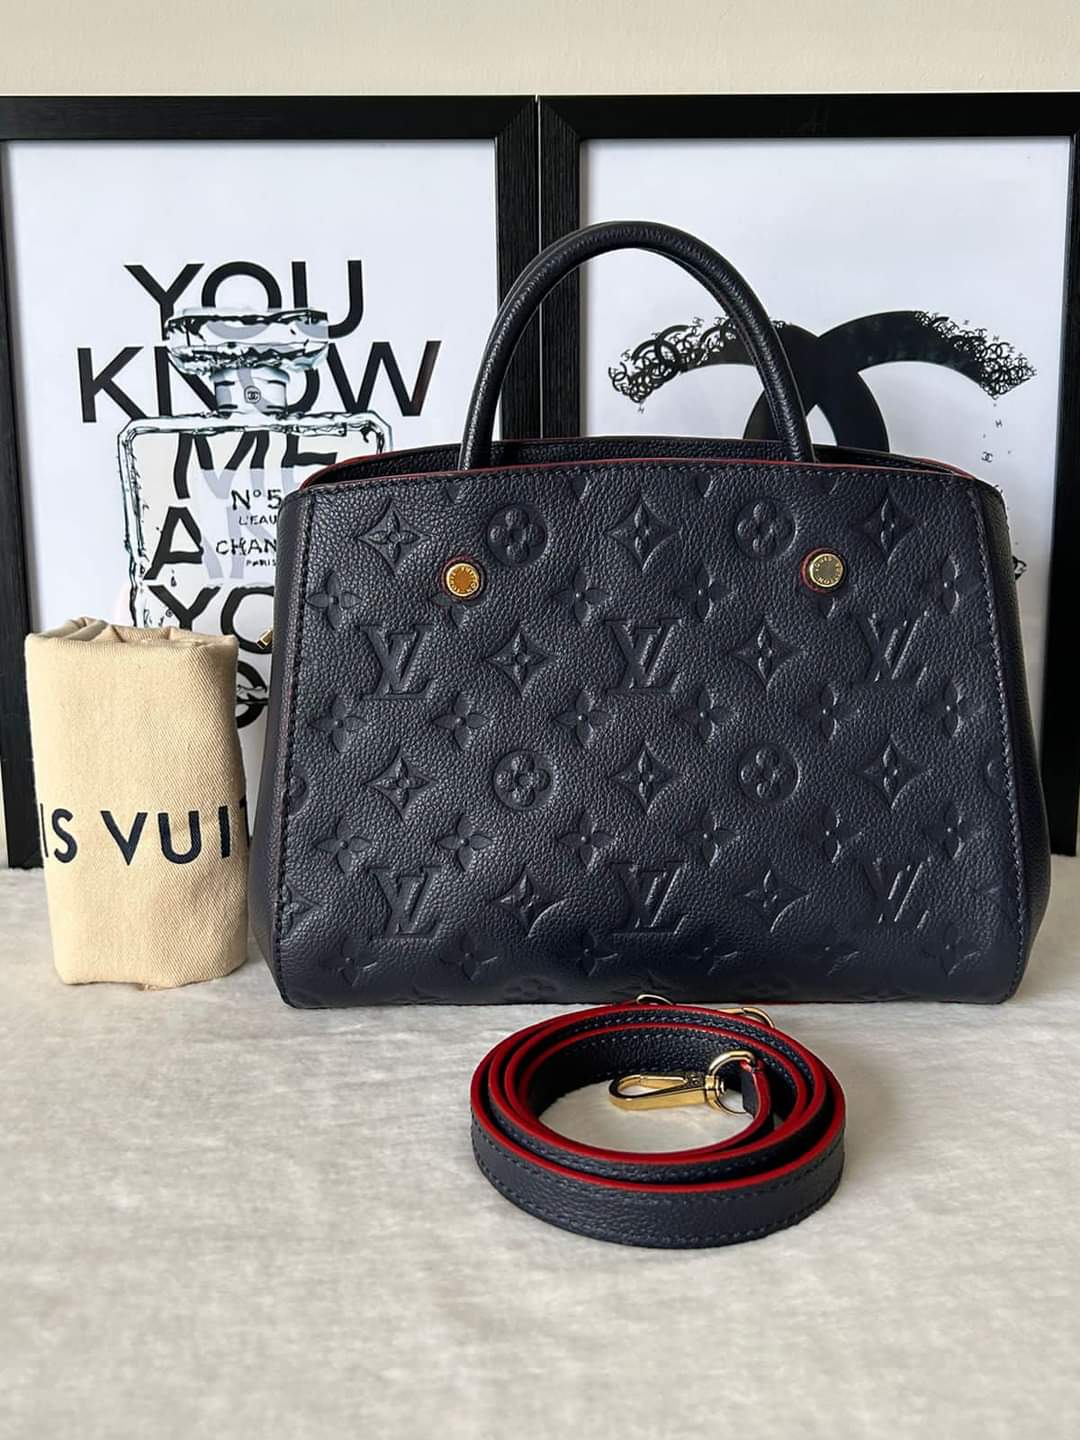 Louis Vuitton - Authenticated Montaigne Handbag - Leather Black for Women, Good Condition